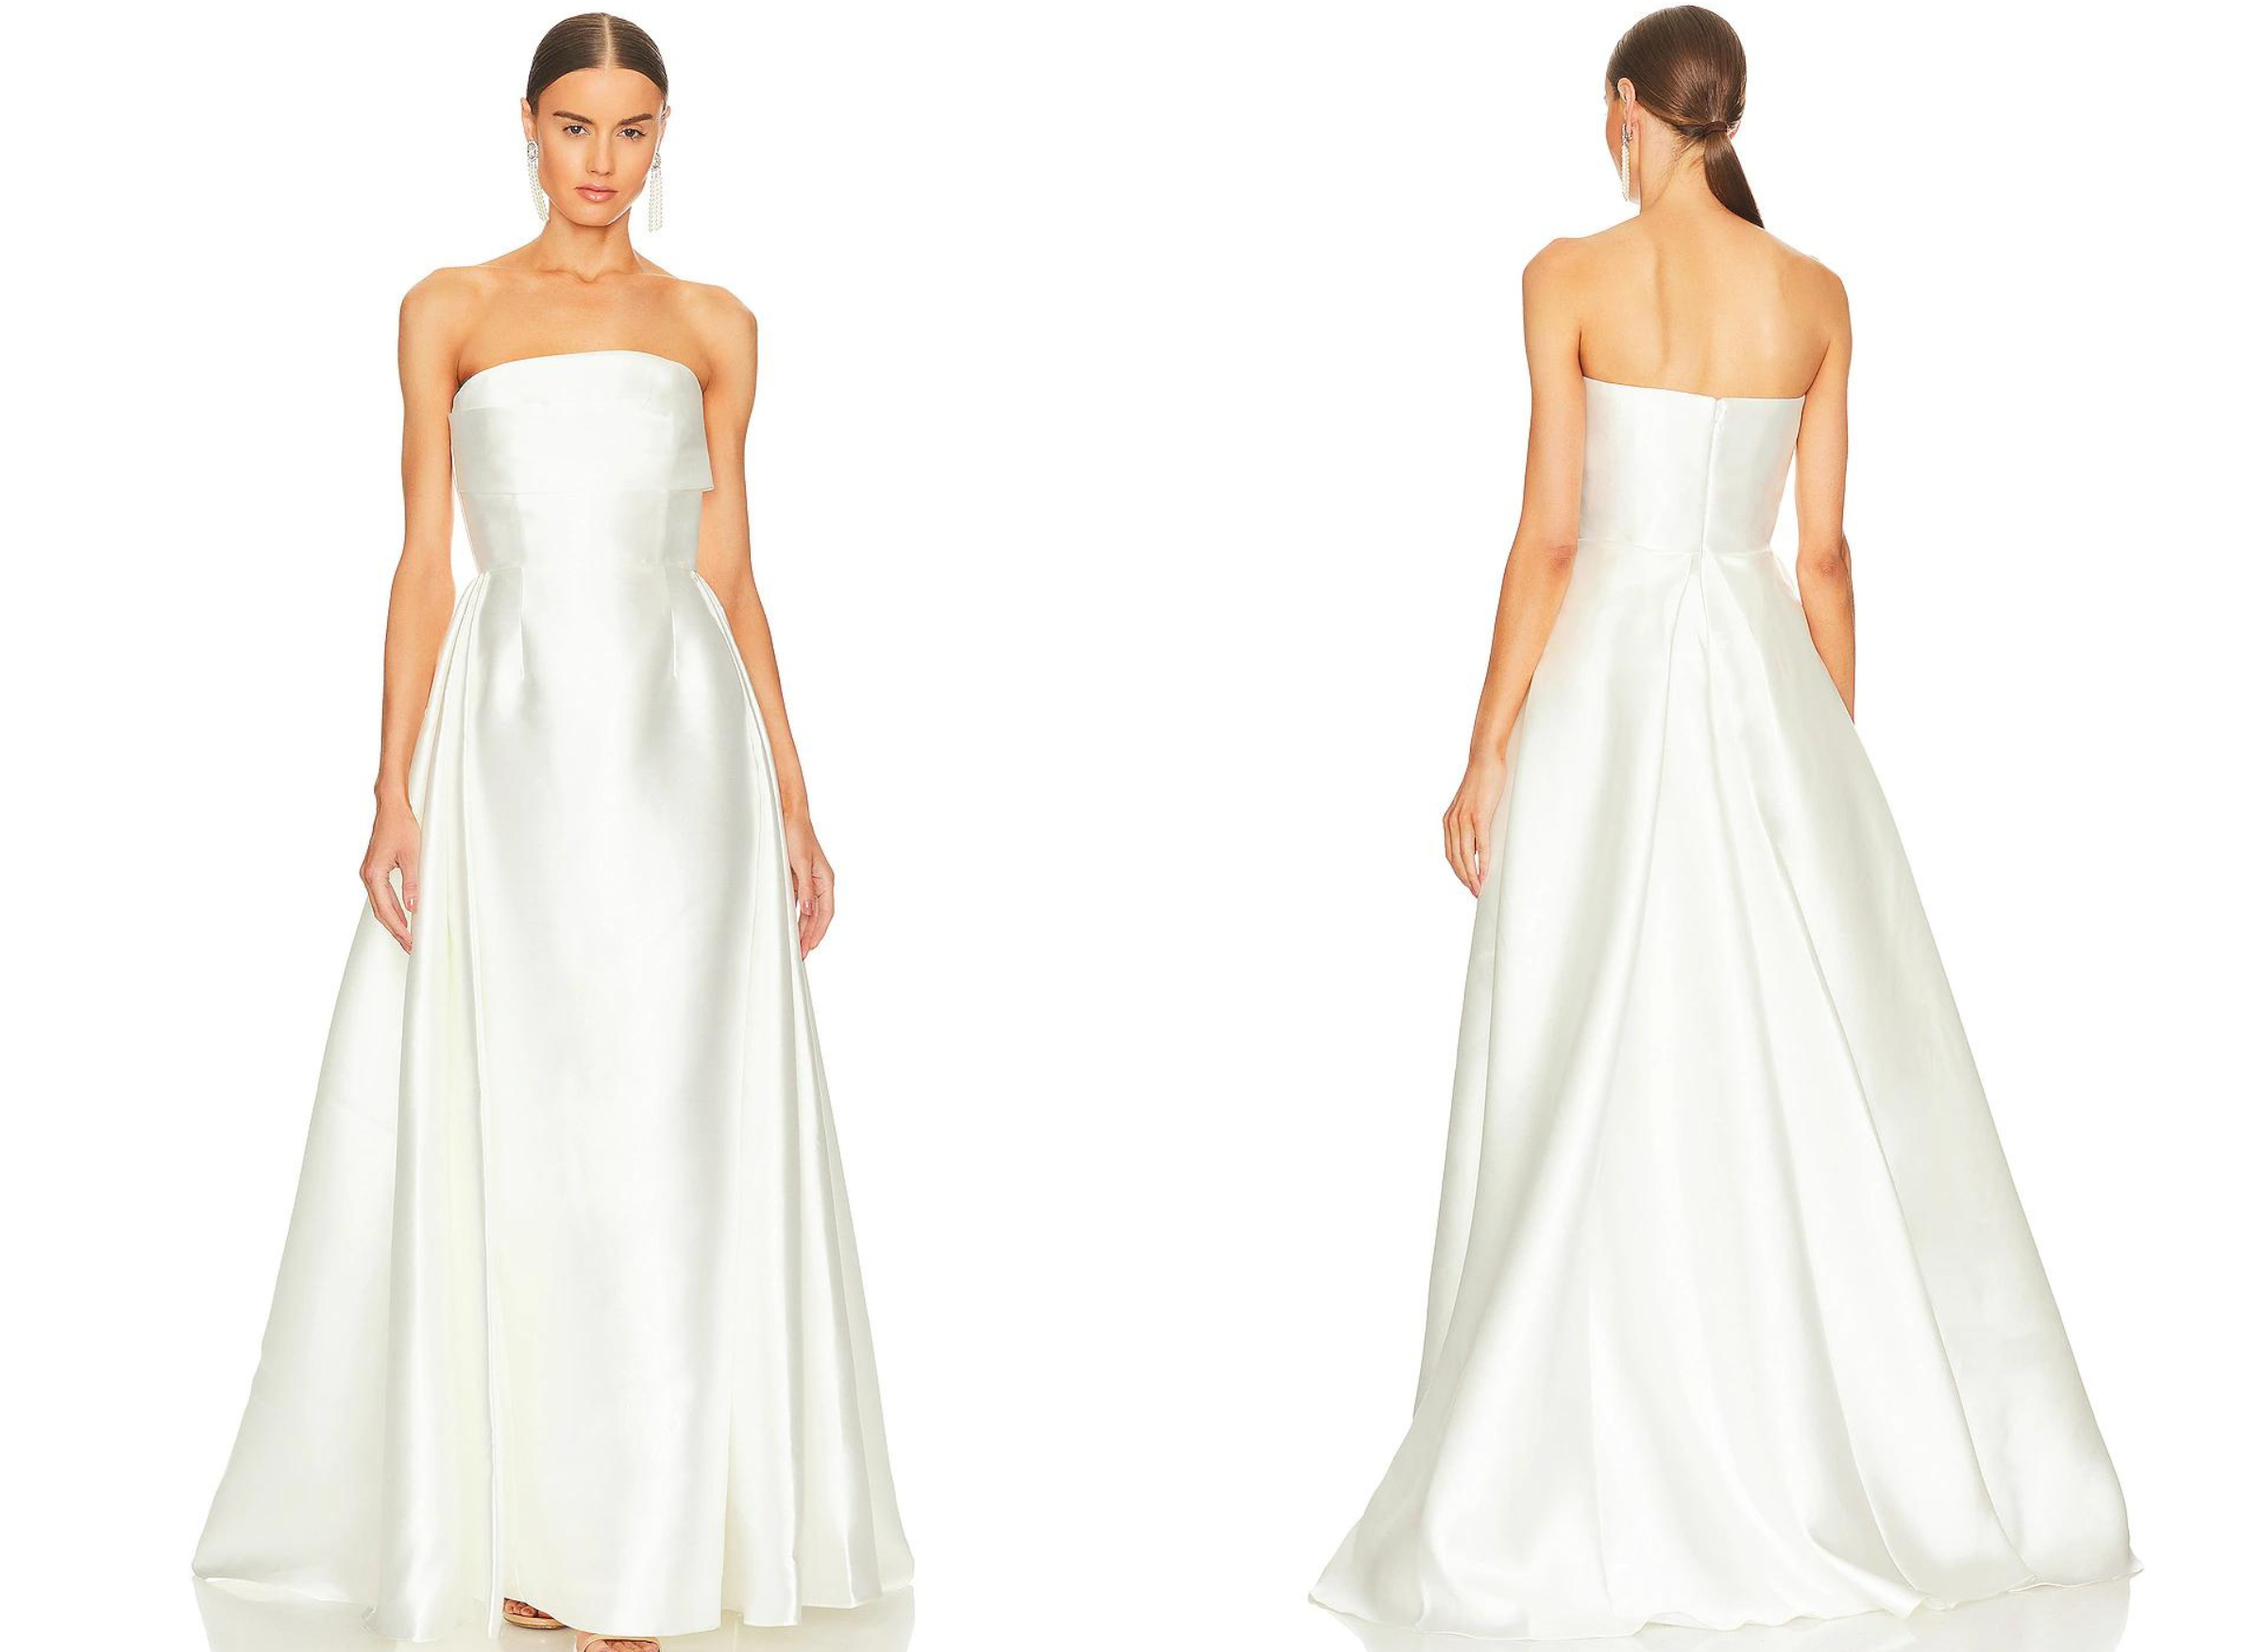 Online wedding dress from revolve